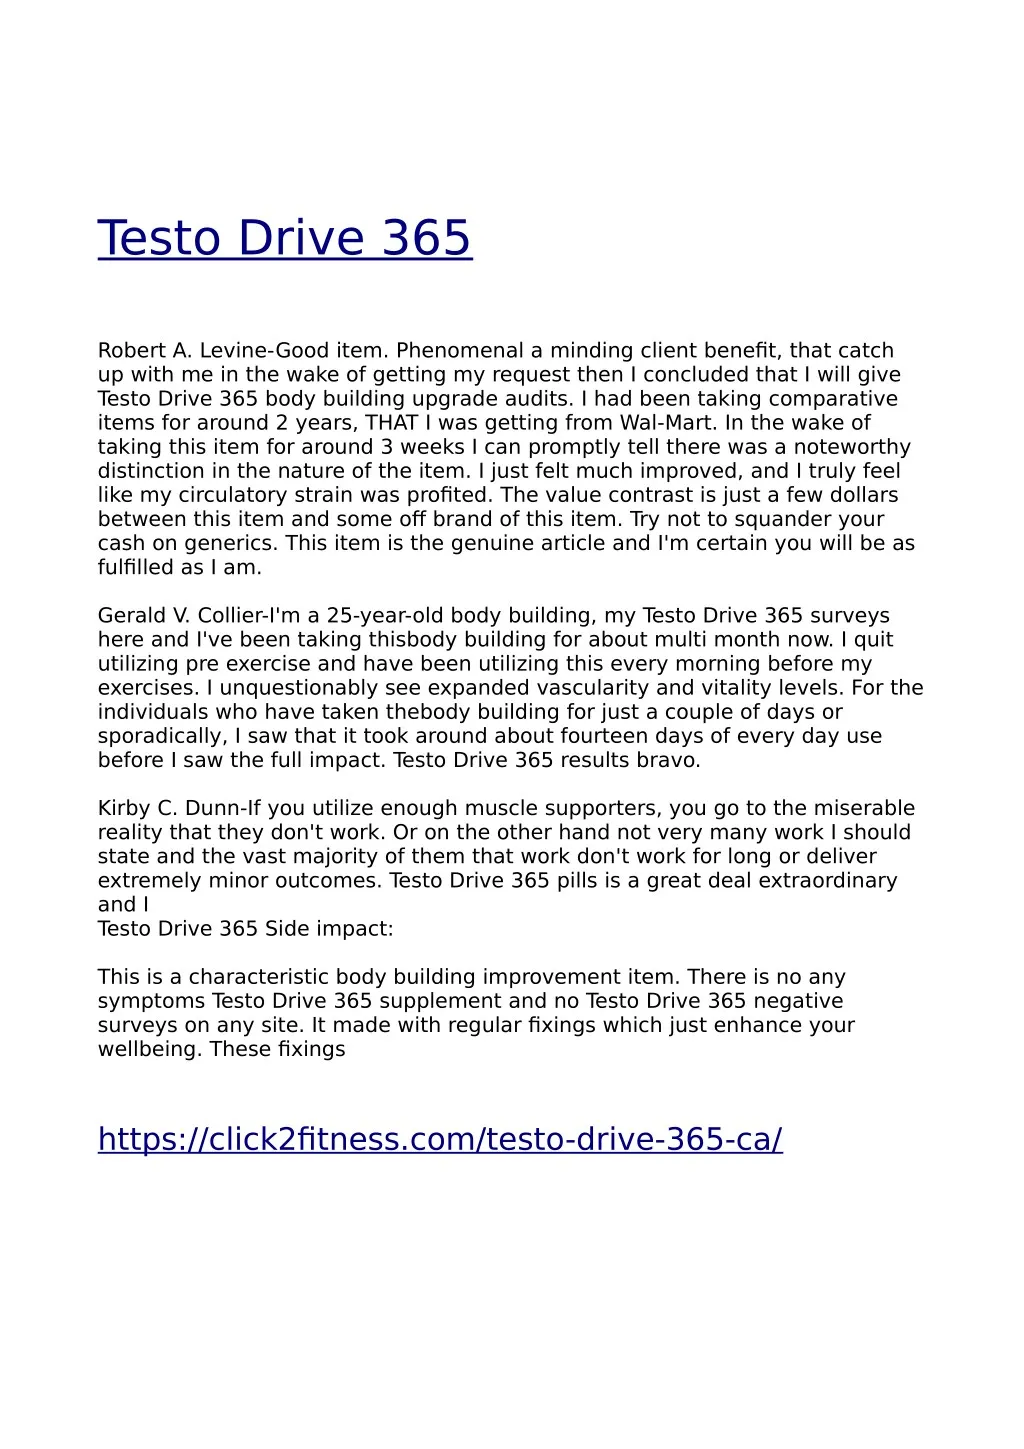 testo drive 365